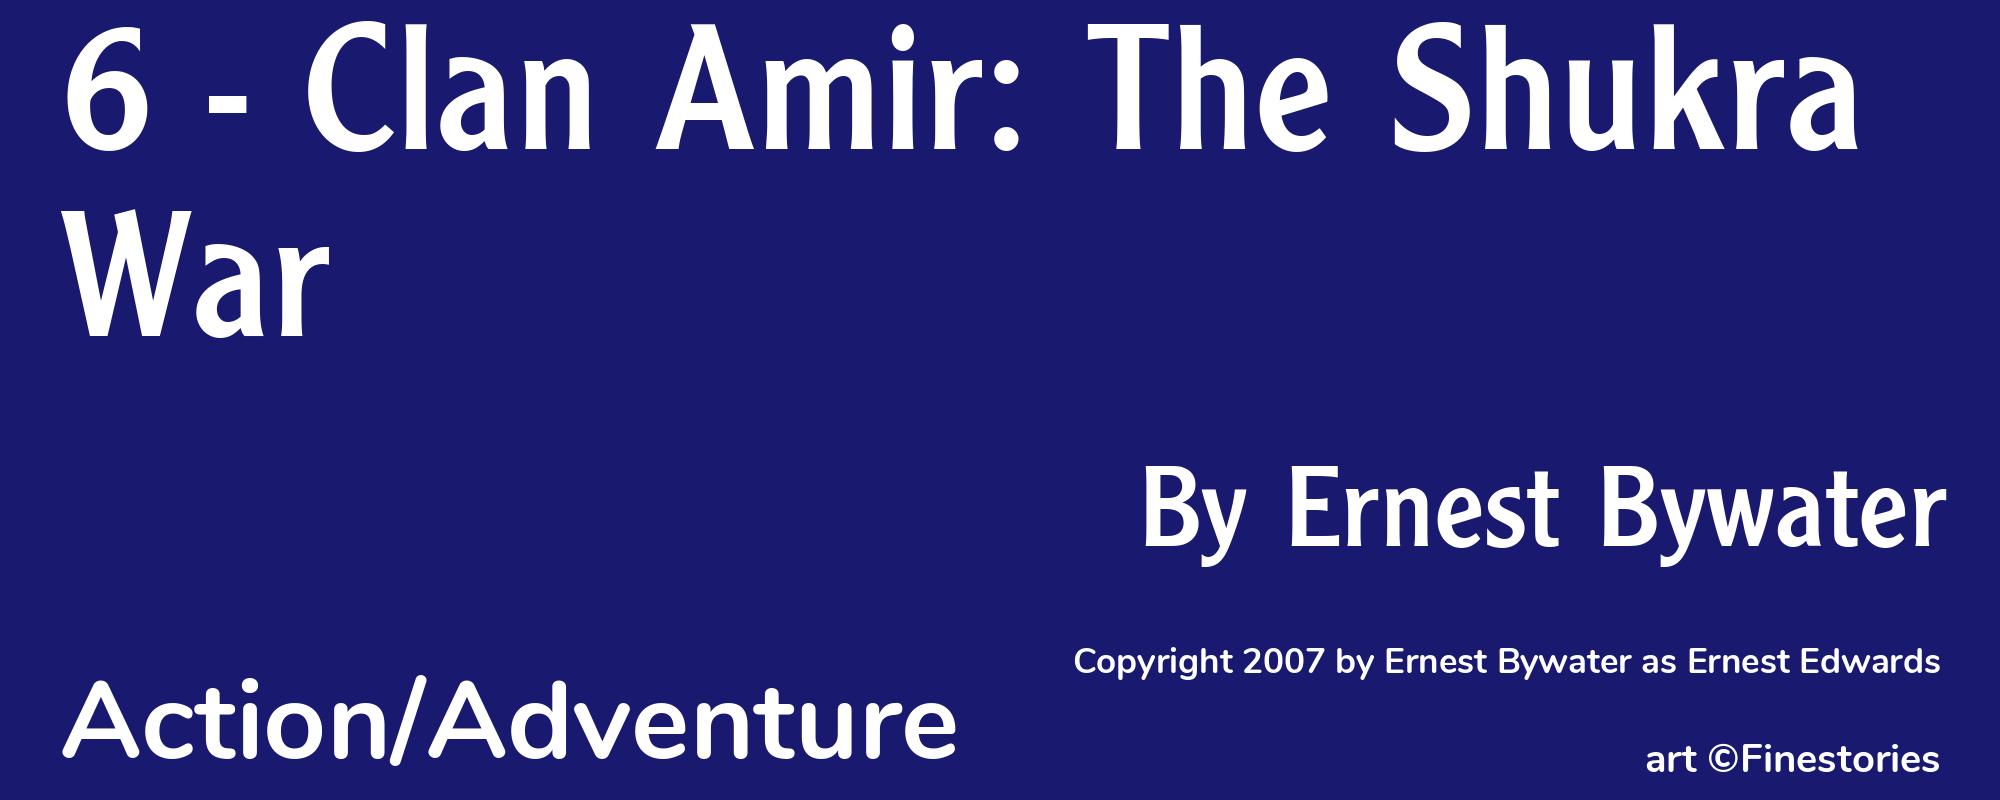 6 - Clan Amir: The Shukra War - Cover